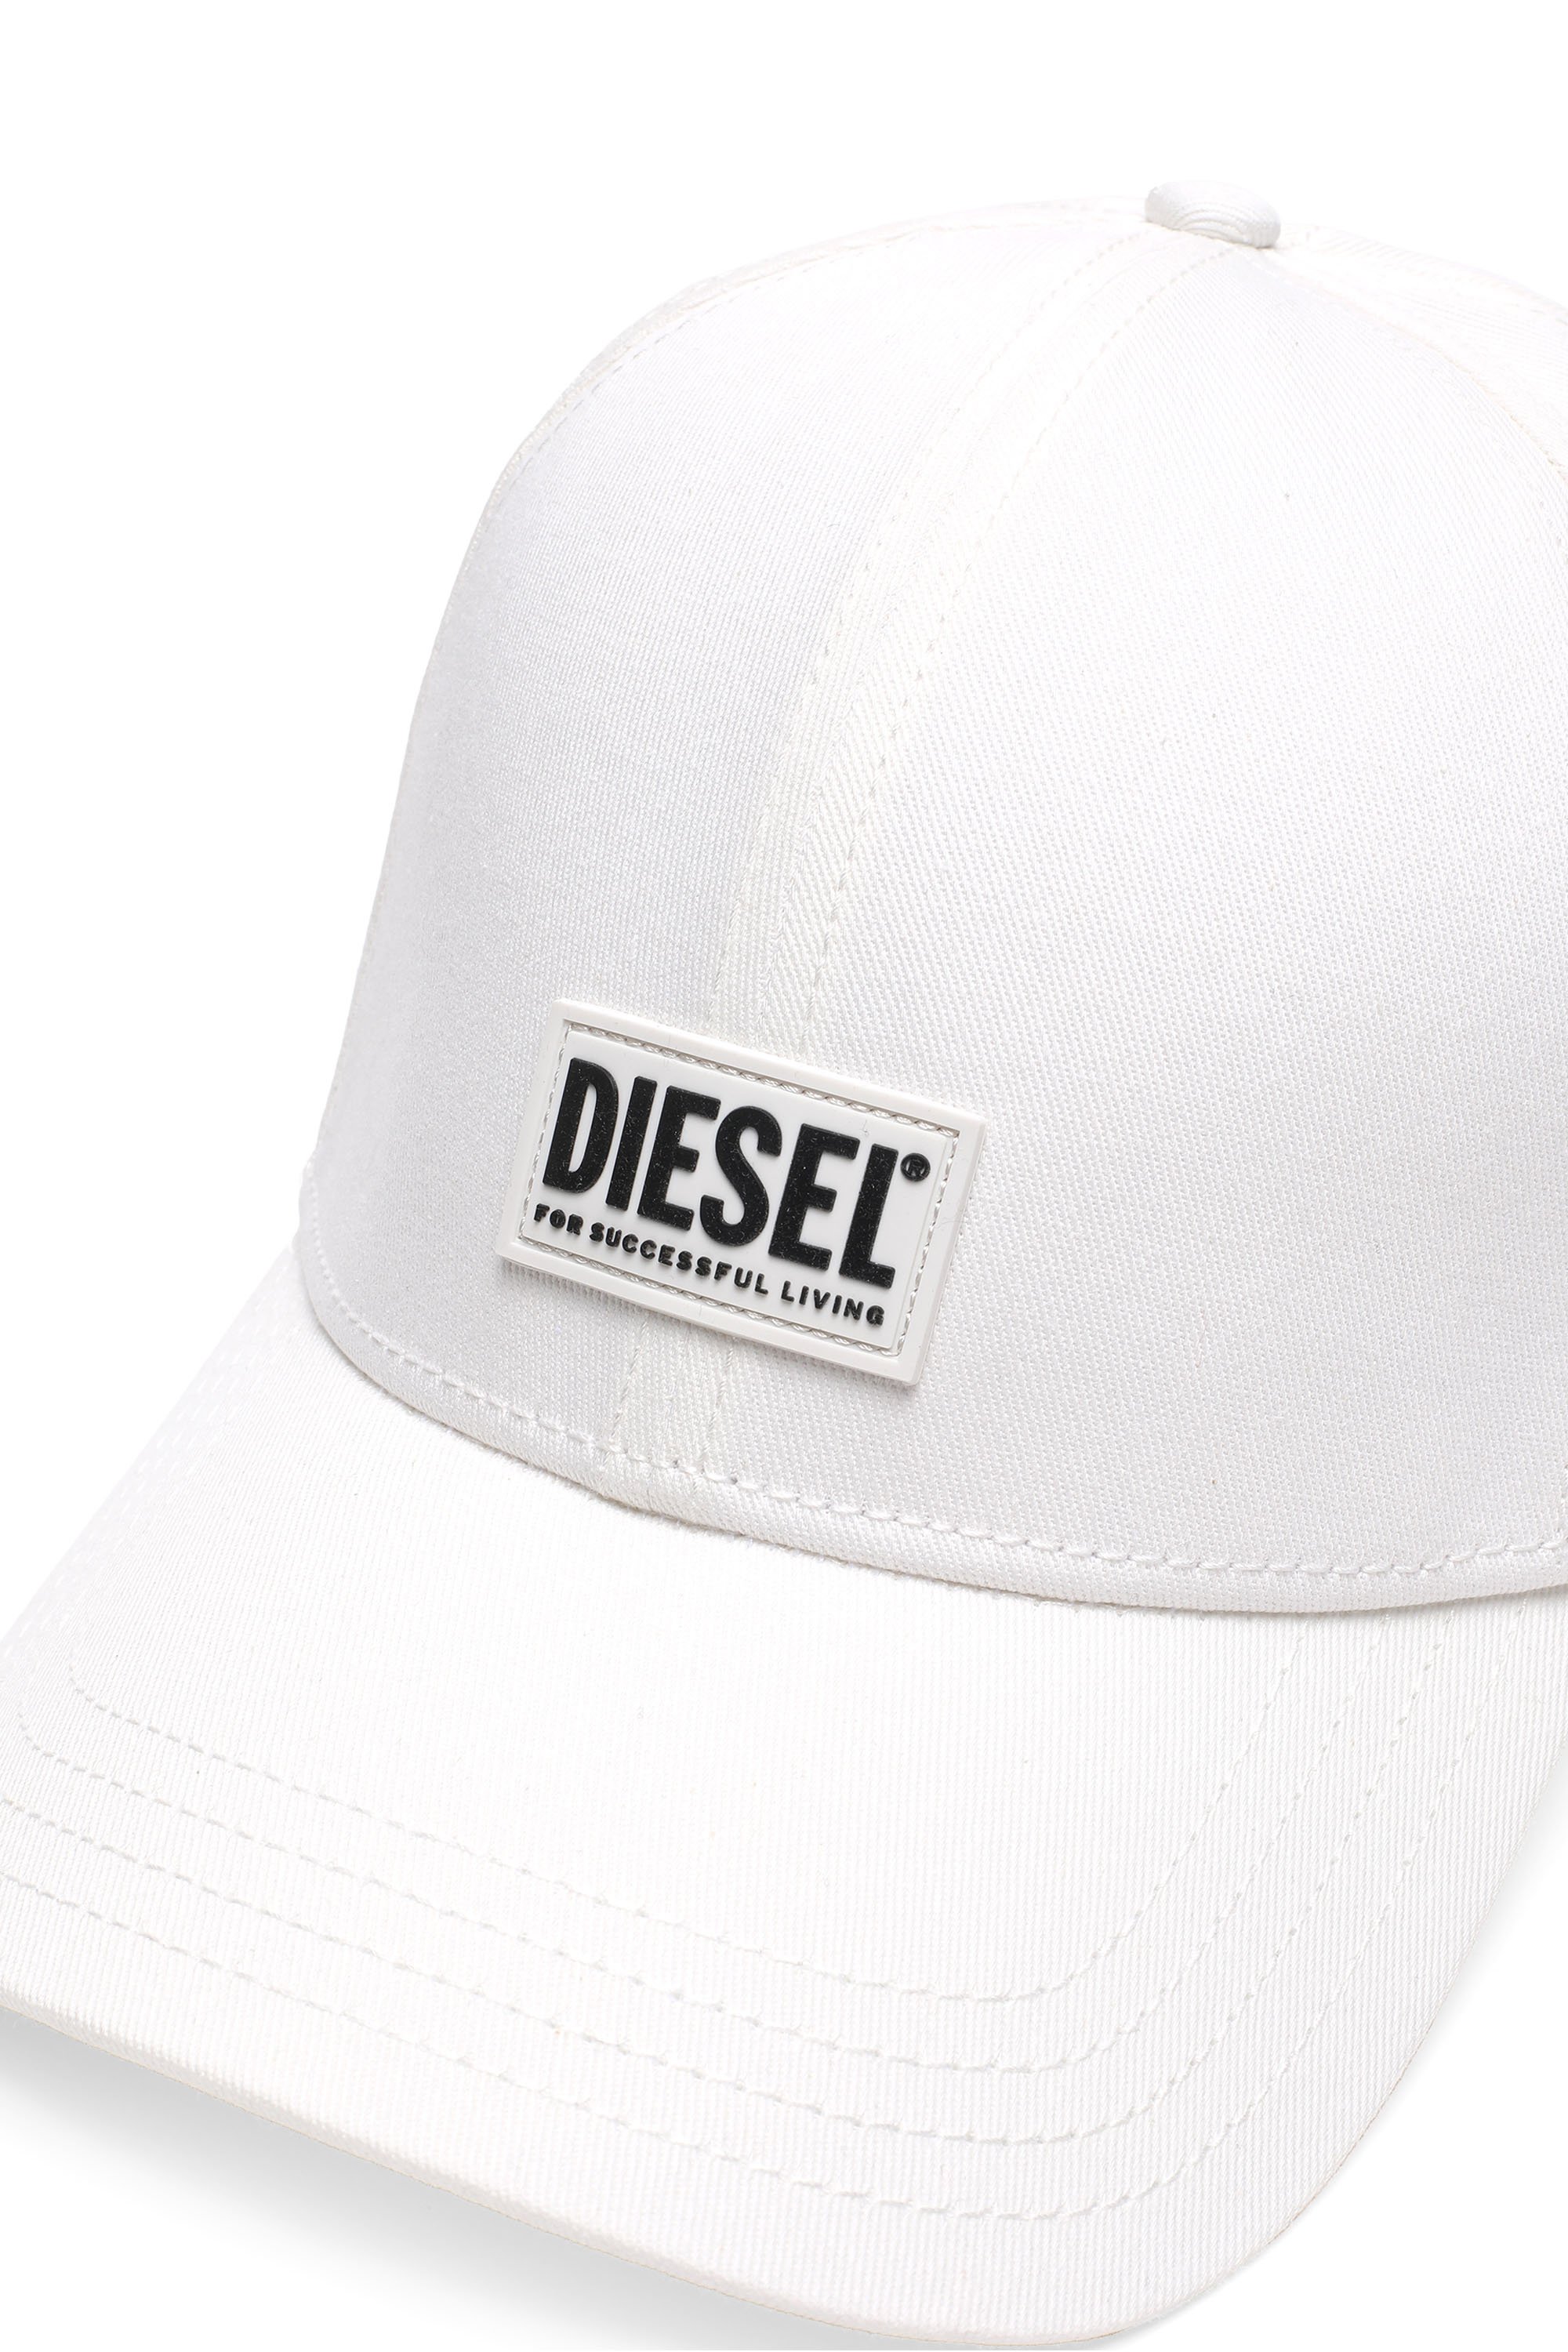 Save 23% DIESEL Cotton Corry-gum Hat in Black for Men Mens Hats DIESEL Hats 